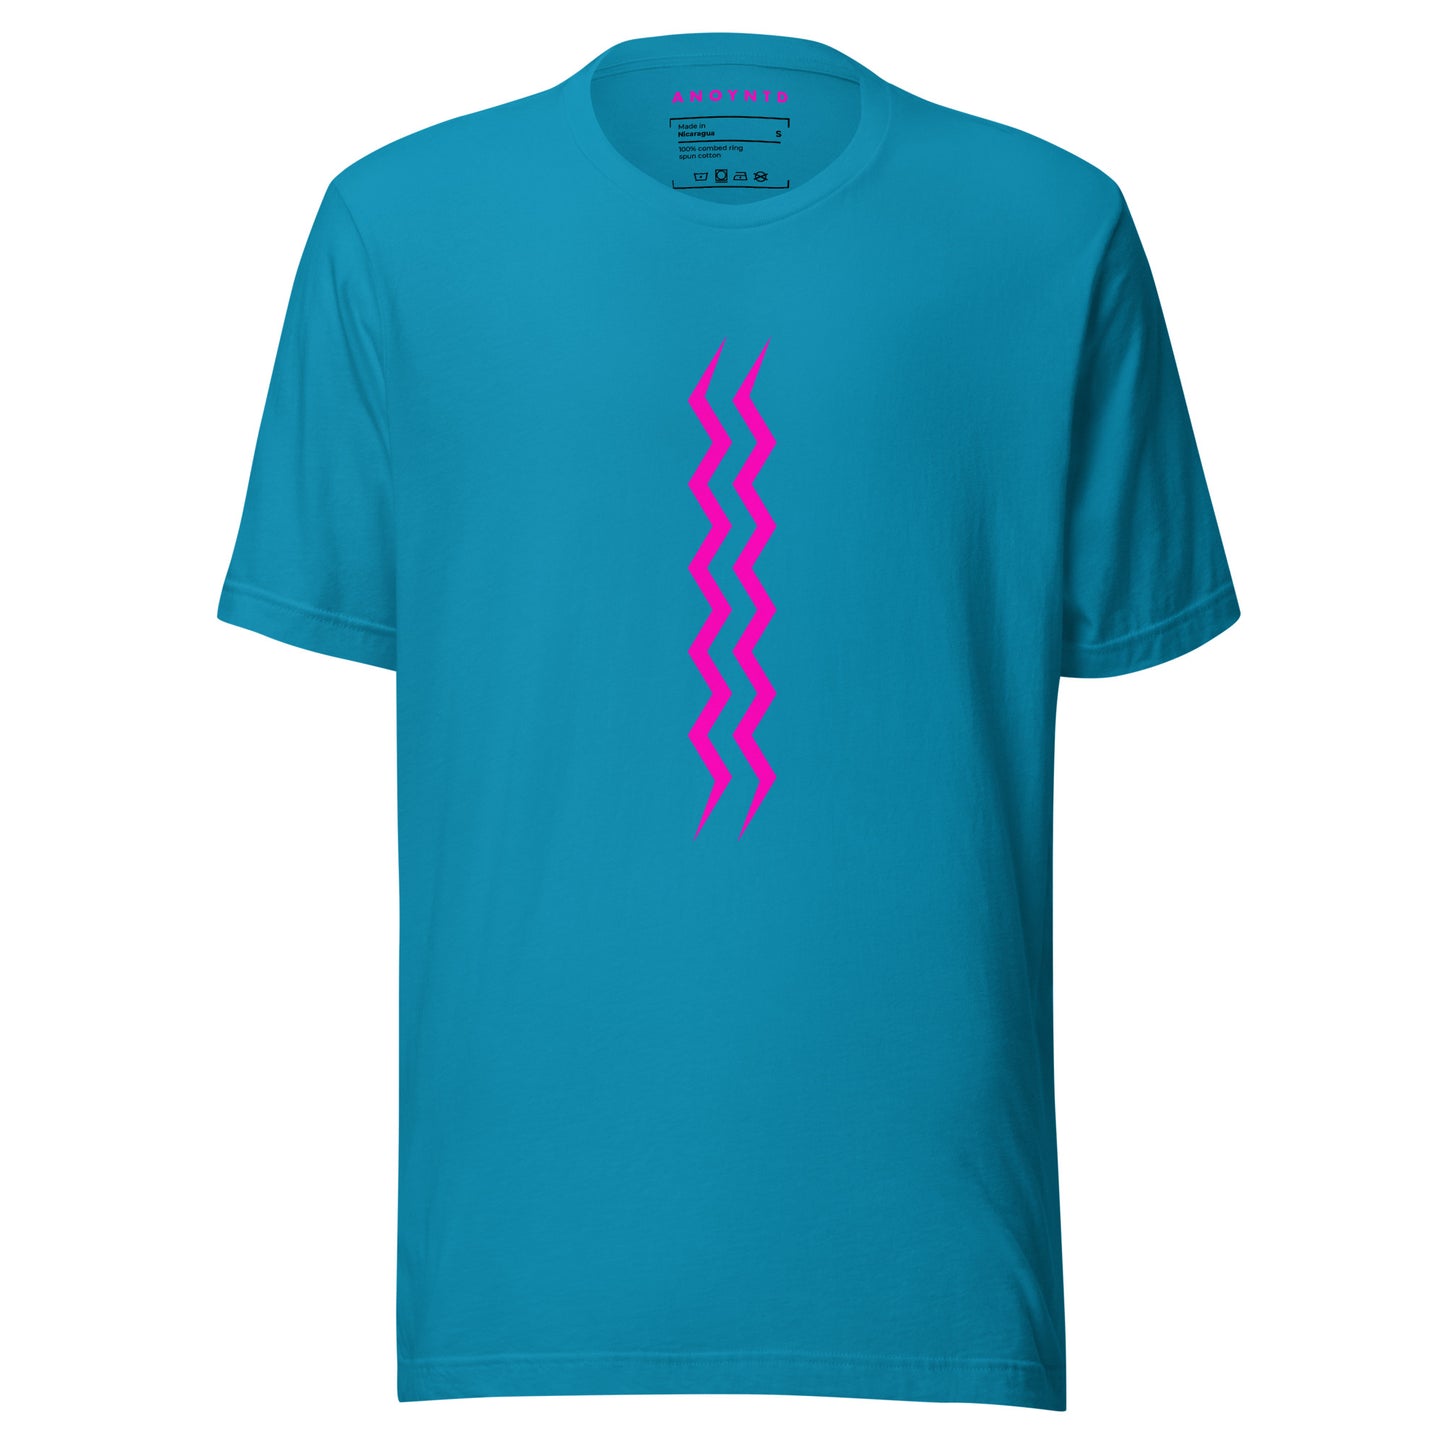 ANOYNTD Vertical Series (Pi) Unisex t-shirt